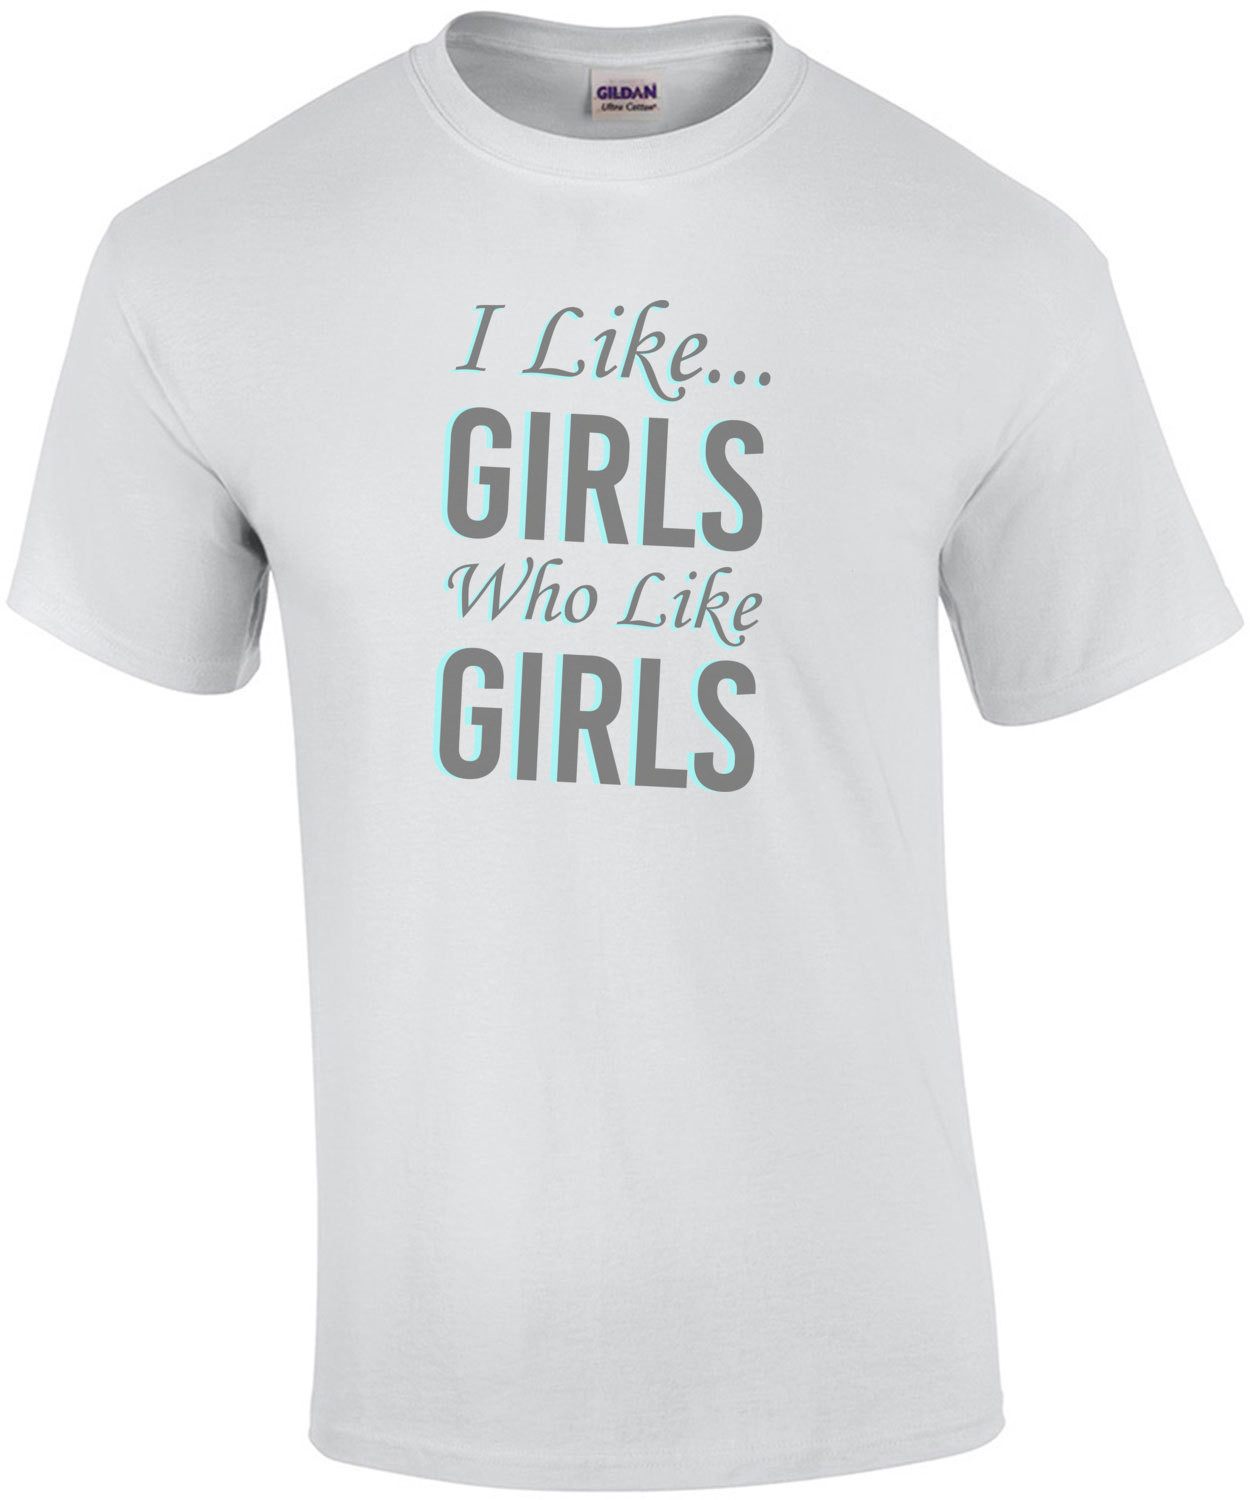 I like girls who like girls - lesbian t-shirt